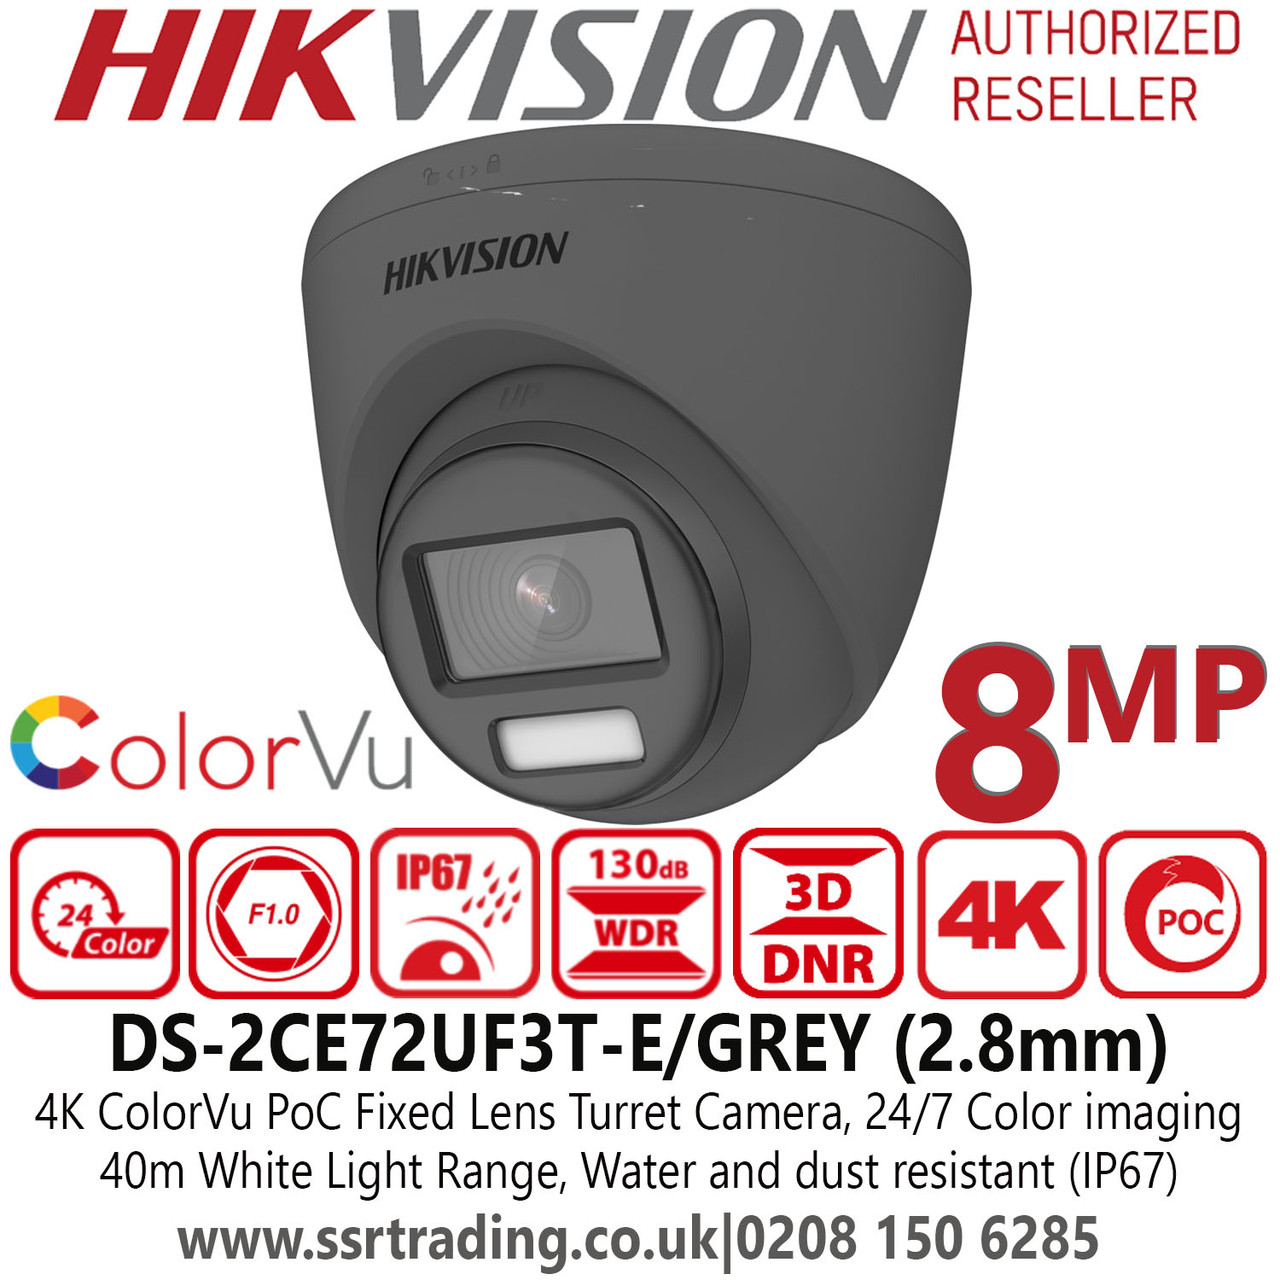 Hikvision HIKVISION COLORVU 4K SYSTEM POC CCTV 8MP DVR DS-2CE72UF3T-E FULL HD CAMERAS 2TB 